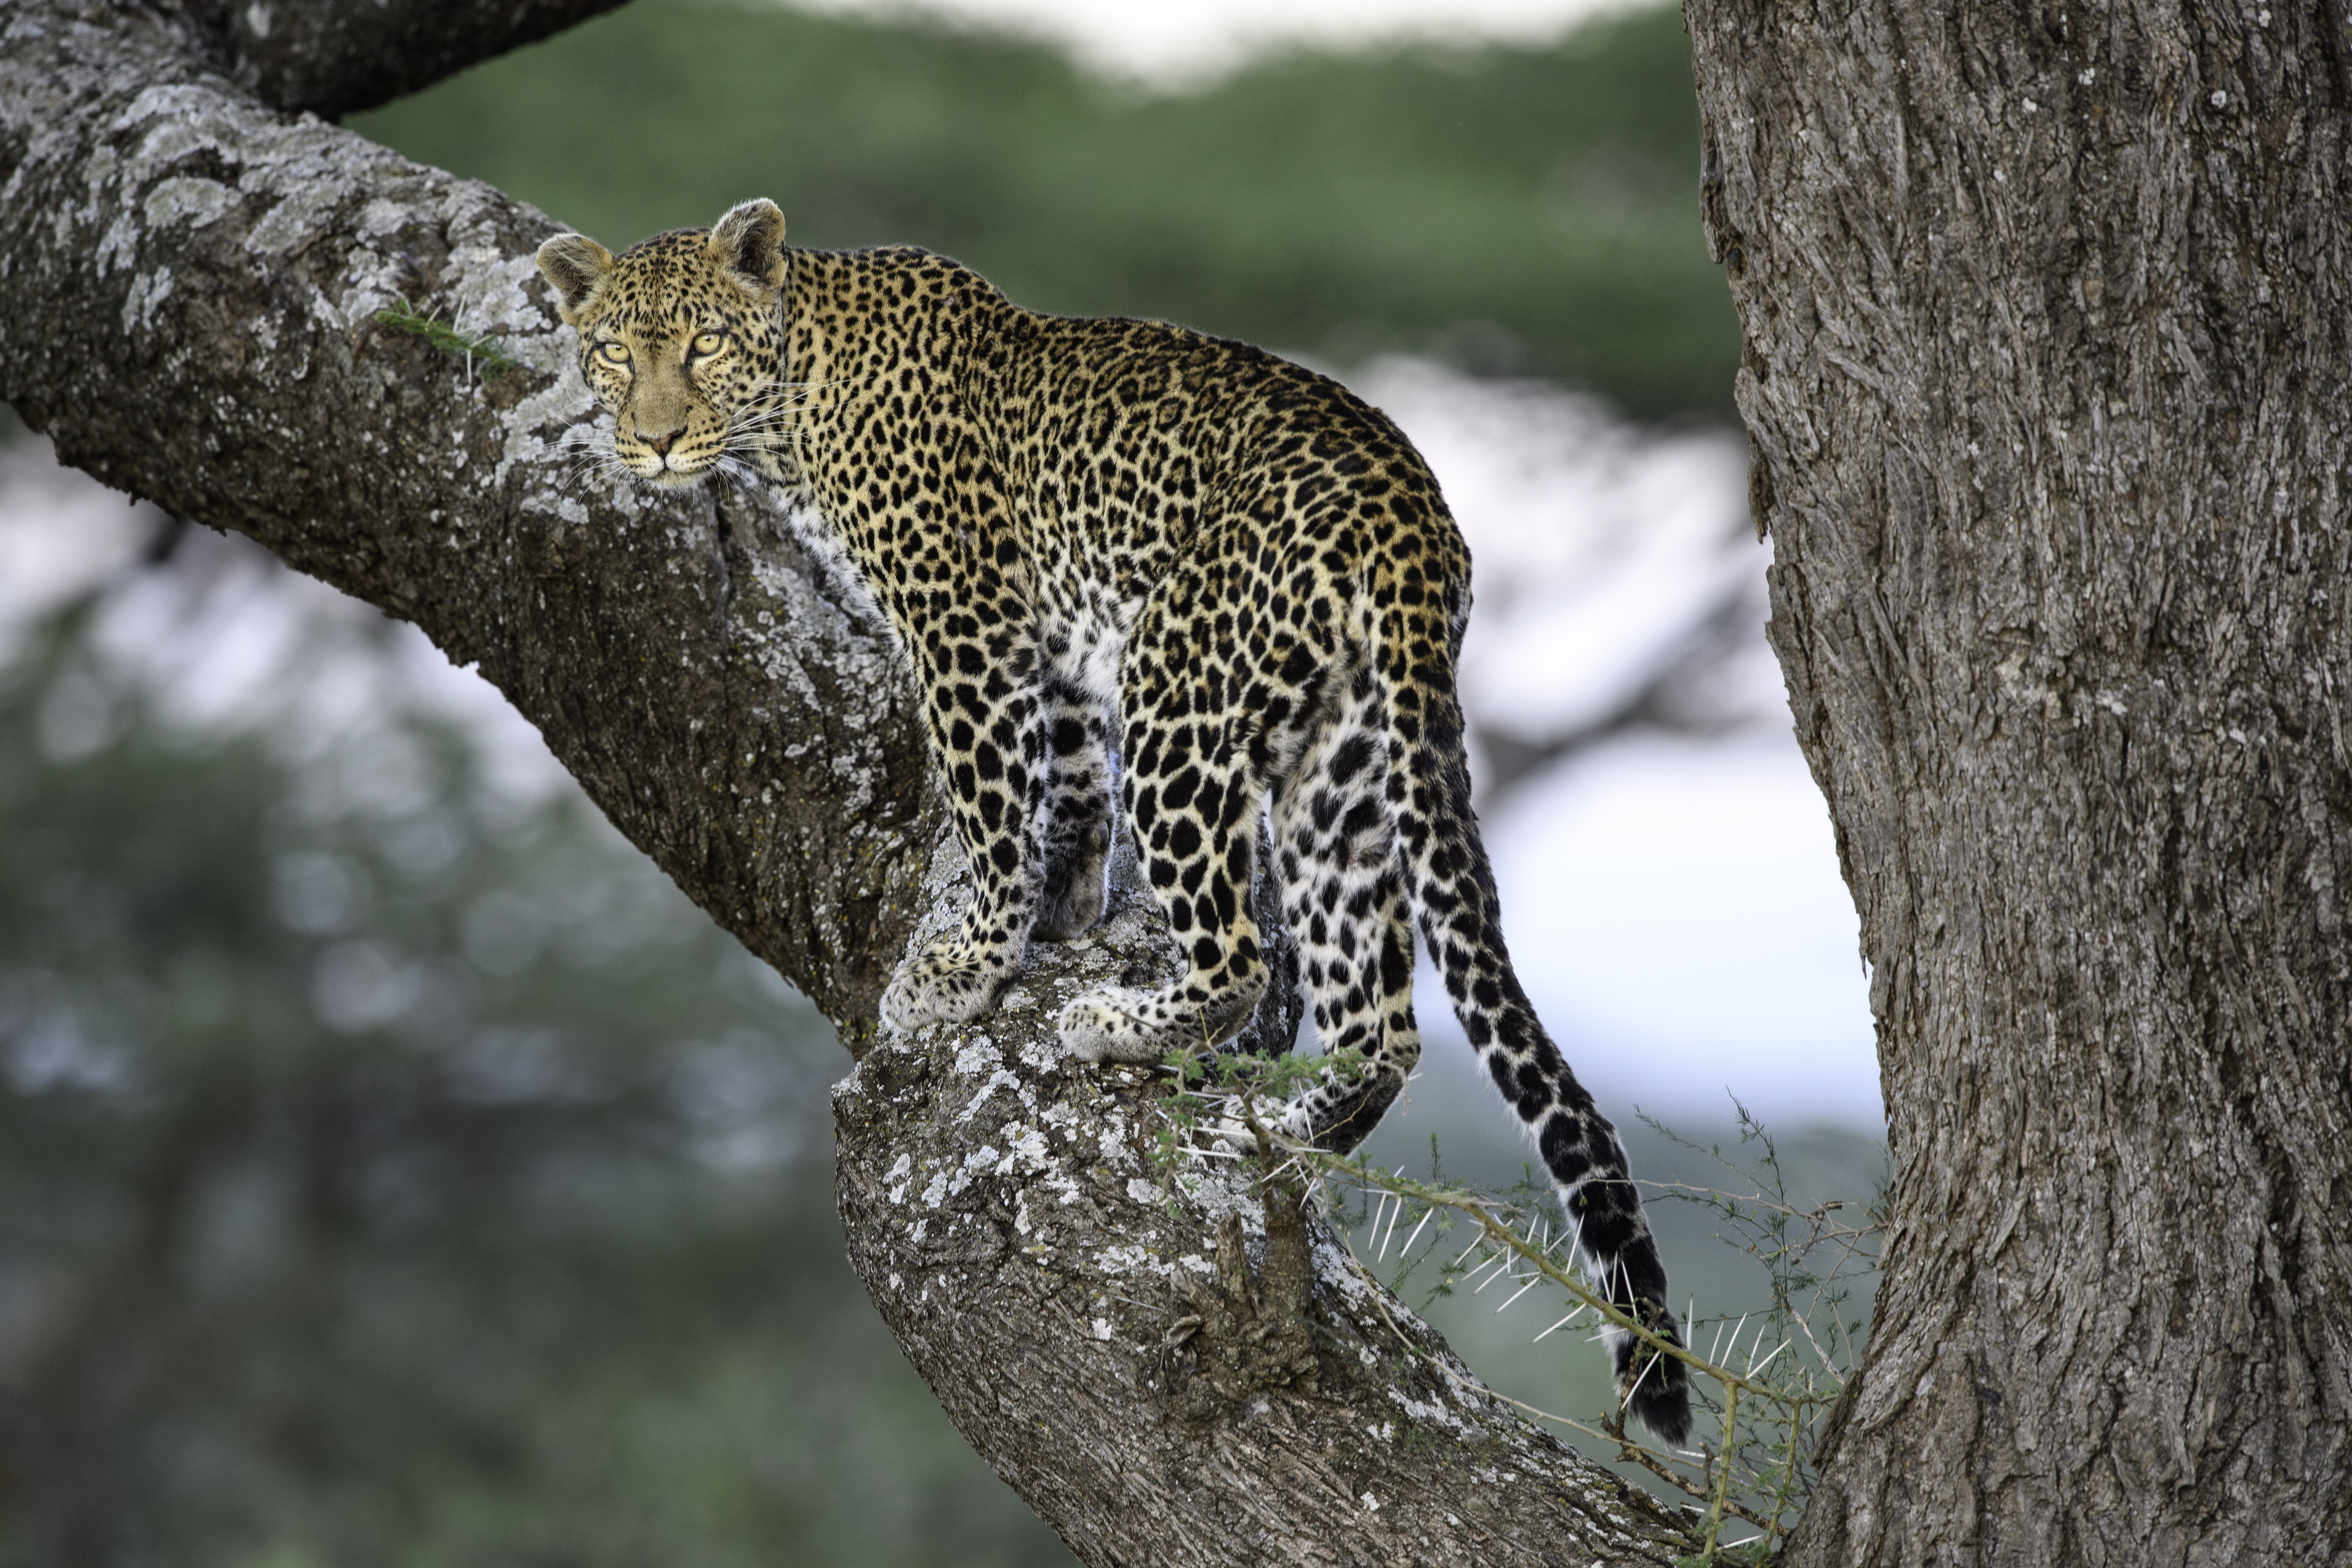 "Female leopard climbing an Acacia tree. Woodland on the edge of the short grass plains of the Serengeti / Ngorongoro Conservation Area (NCA) near Ndutu, Tanzania."